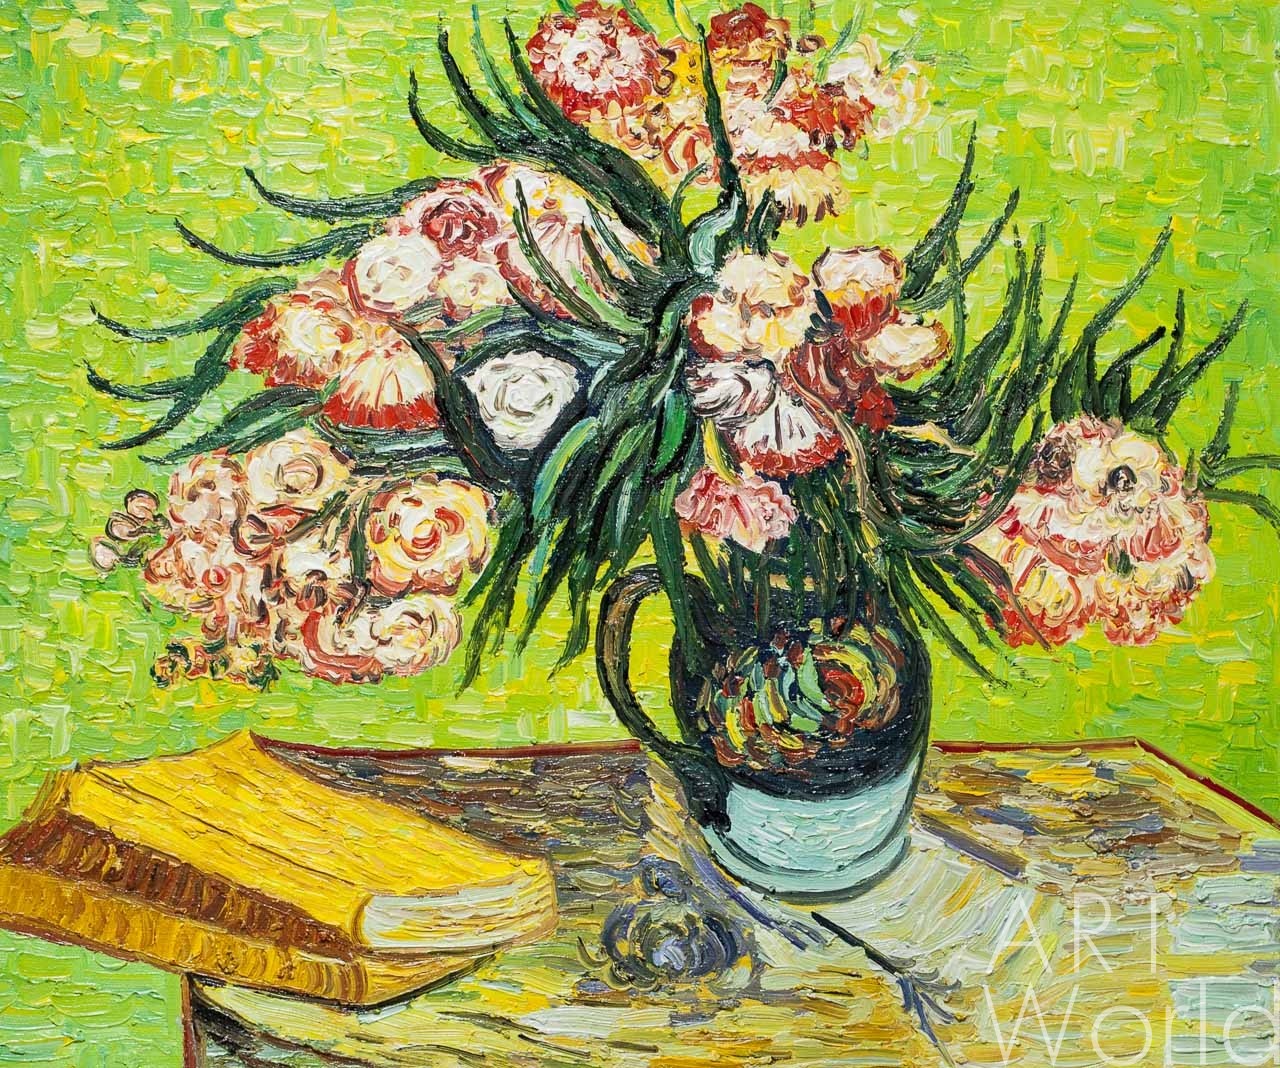 картина масло холст Копия картины Ван Гога "Натюрморт: ваза с олеандрами и книгами"  (копия Анджея Влодарчика), Ван Гог (Vincent van Gogh) Артворлд.ру